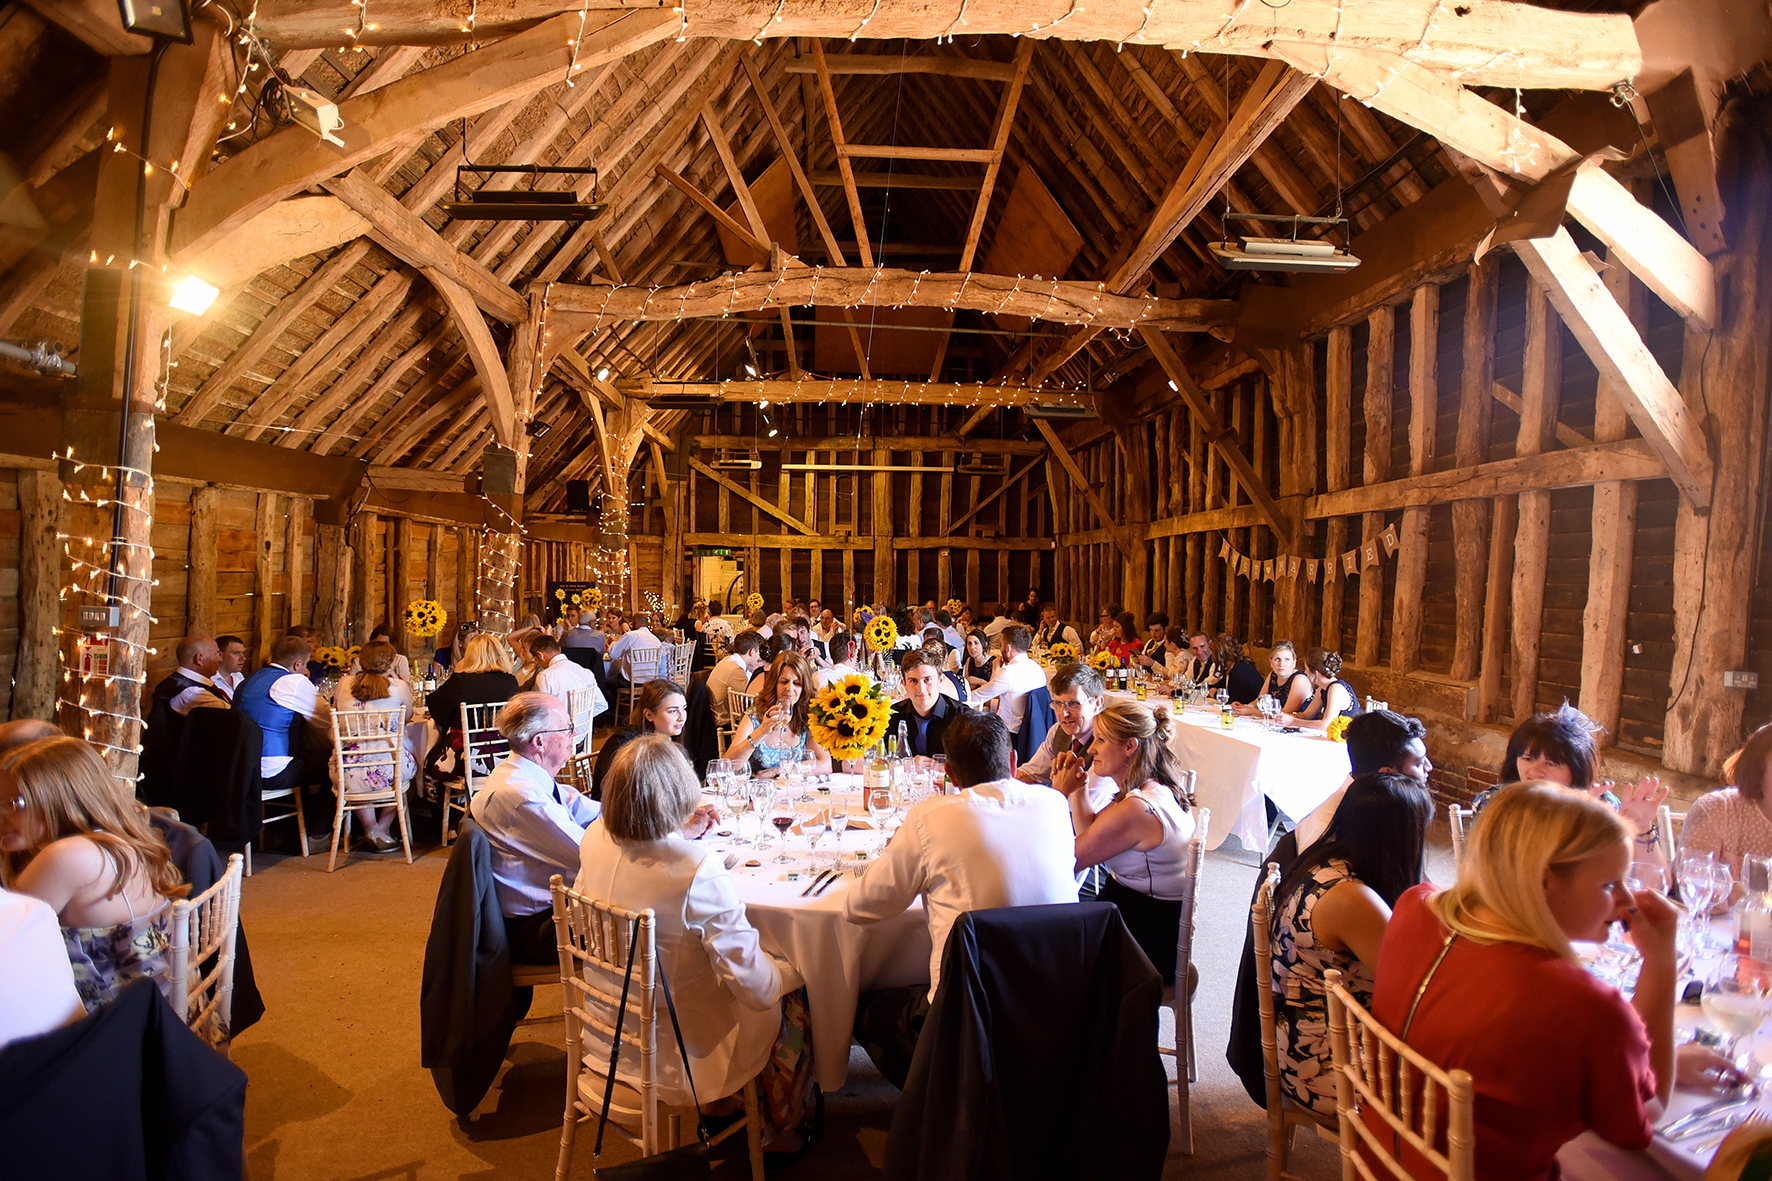 Blackthorpe Barn Wedding Venue, Suffolk - Wedding photography1772 x 1181